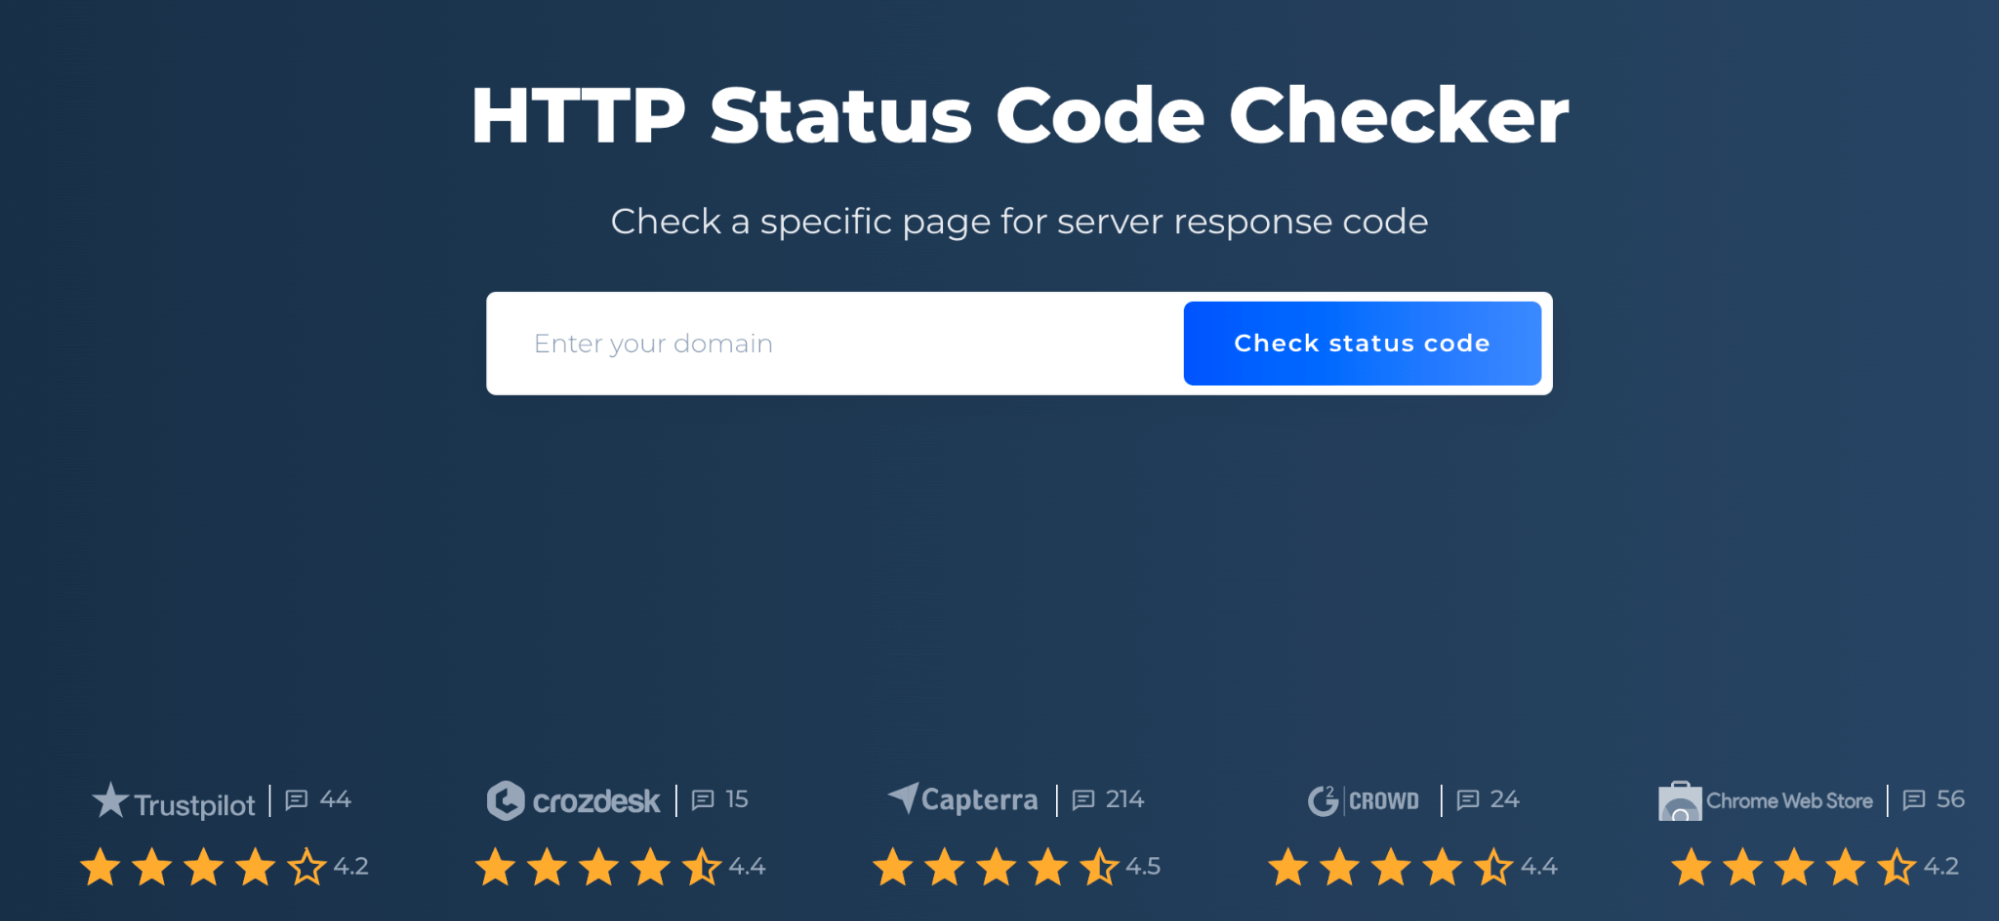 http-status-code-checker-tool-for-identifying-http-202-status-codes